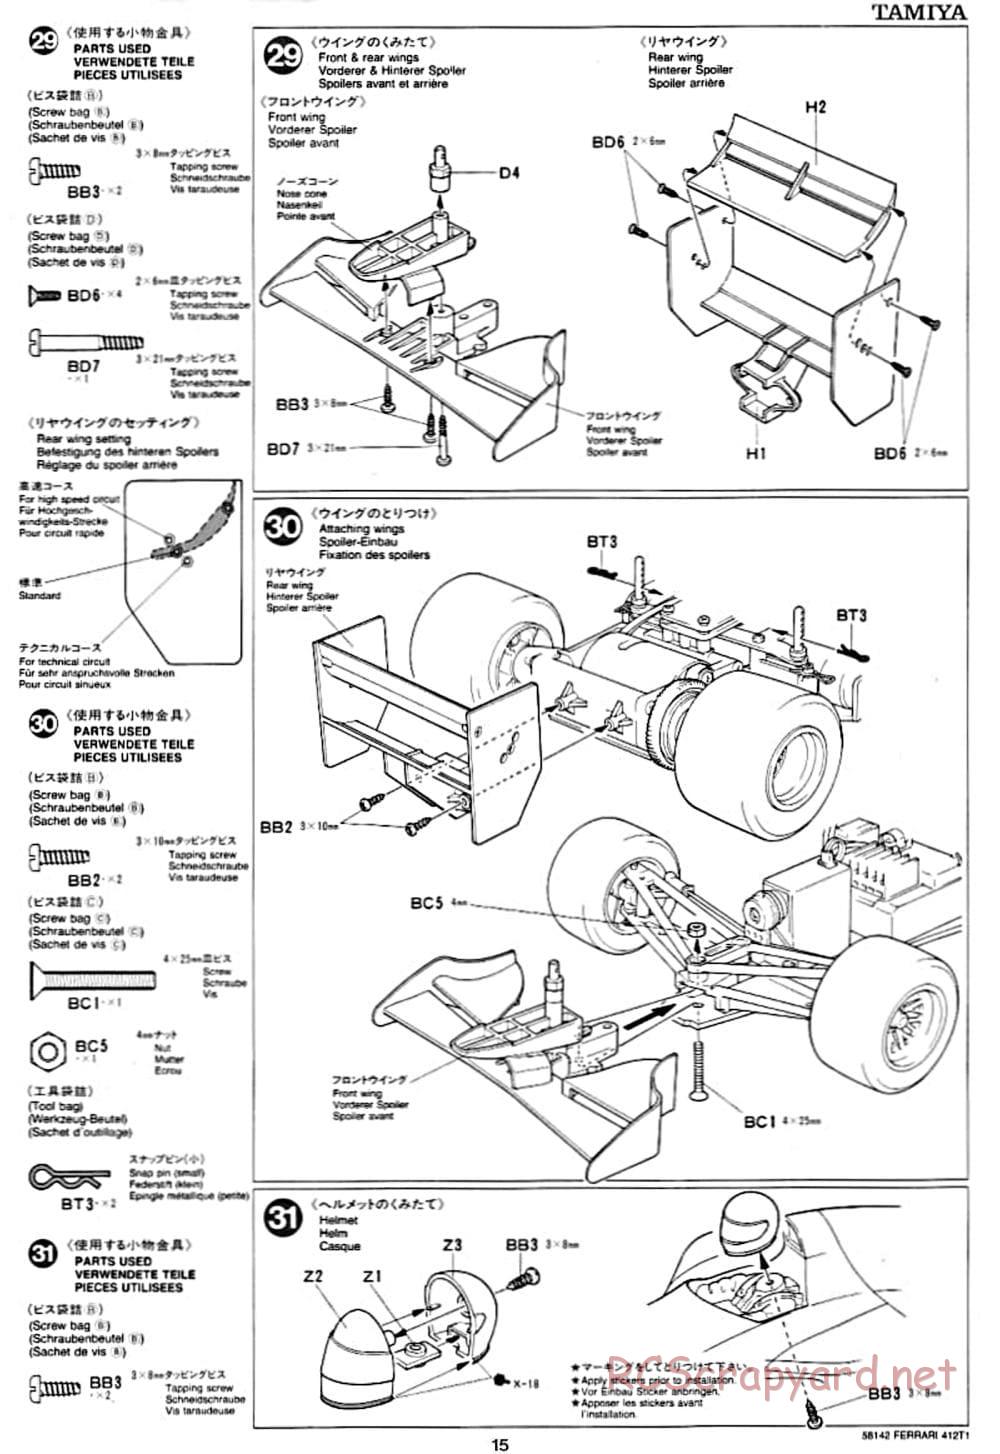 Tamiya - Ferrari 412T1 - F103 Chassis - Manual - Page 15